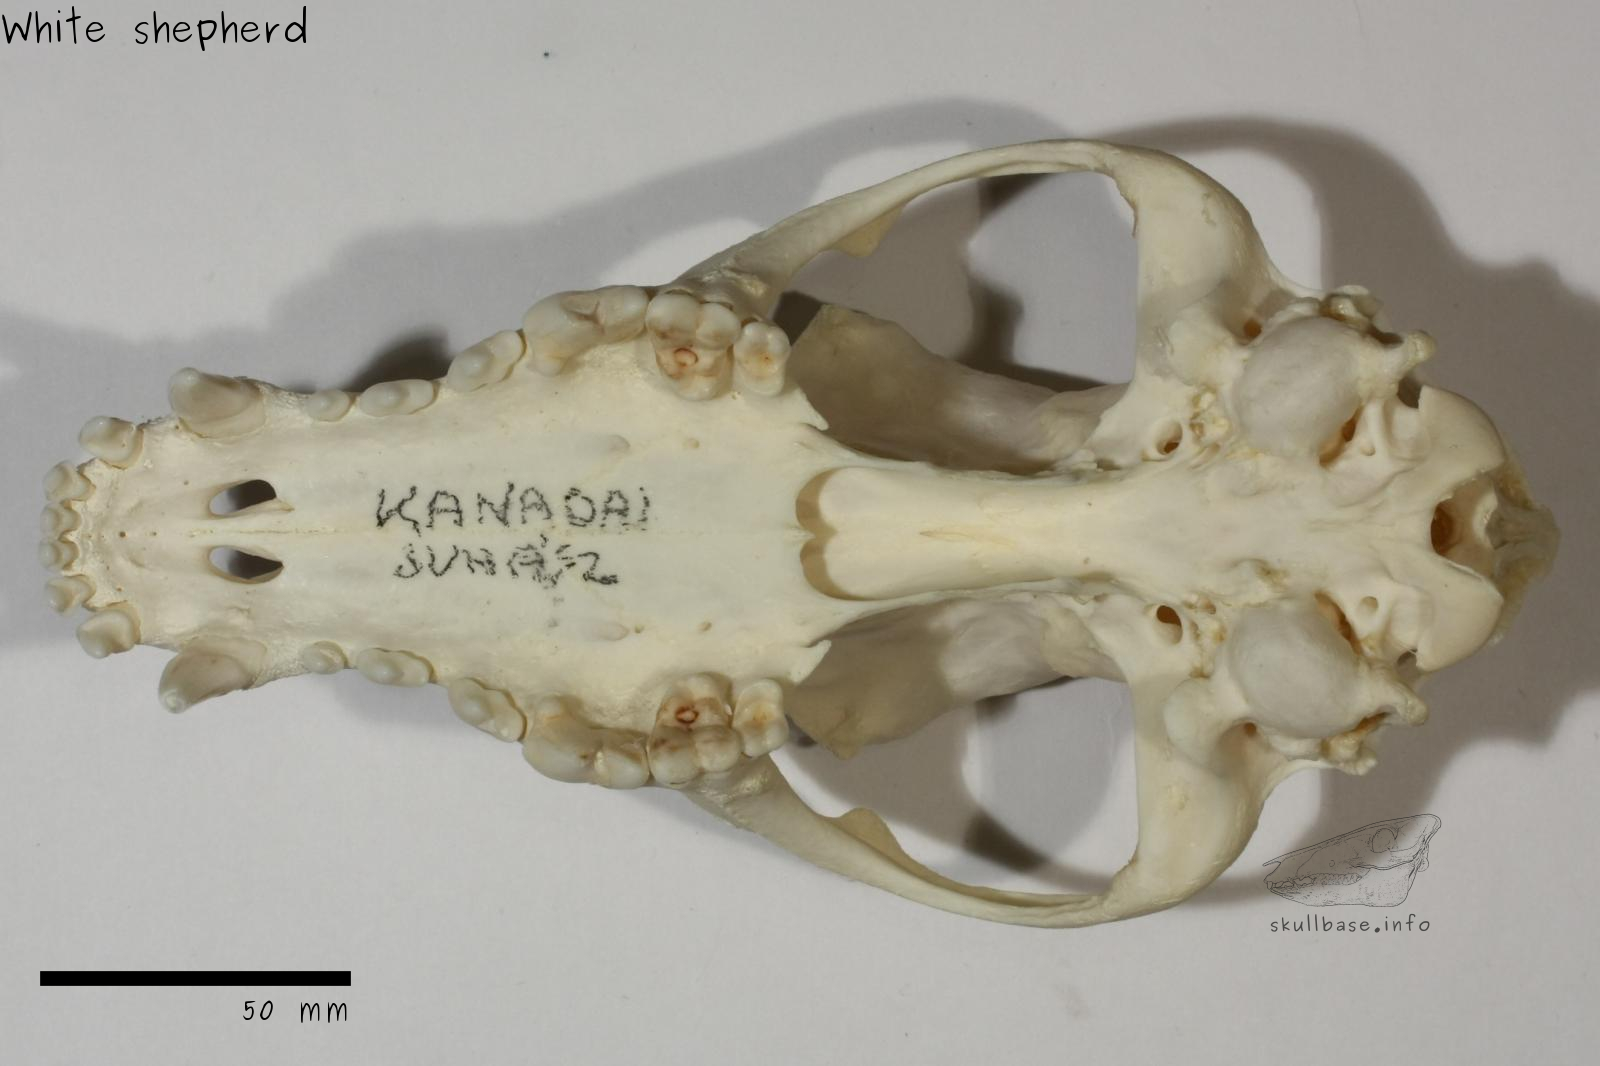 White shepherd (Canis lupus familiaris) skull ventral view